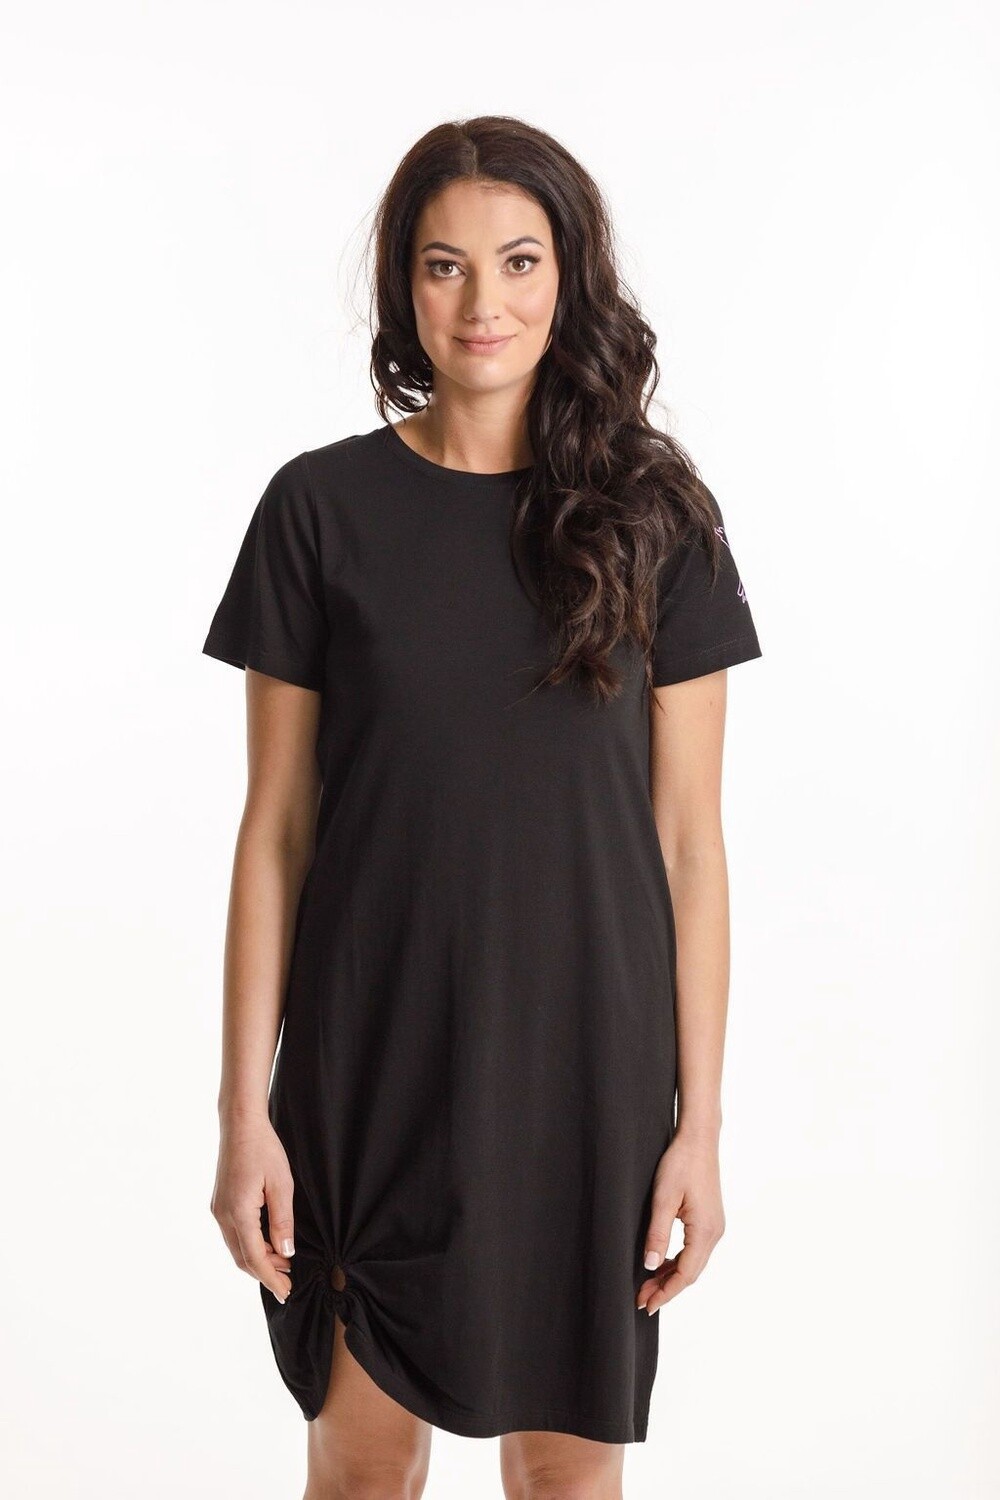 Home-lee Jane Dress - black with lilac sorbet X outline on sleeve